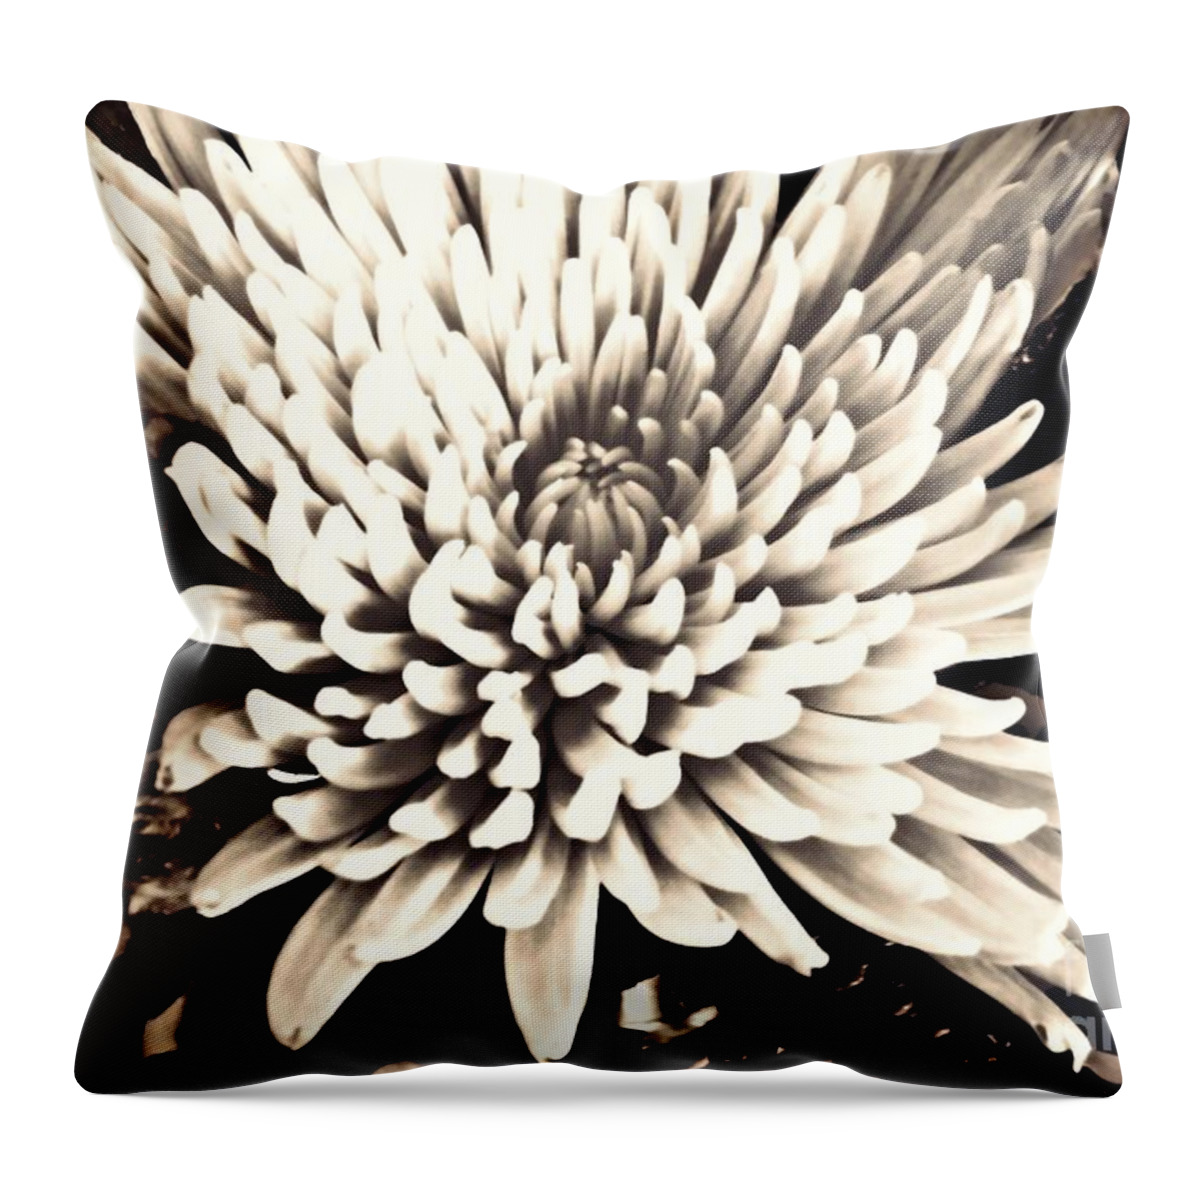 Chrysanthemum Throw Pillow featuring the photograph Chrysanthemum in Sepia 2 by Sarah Loft